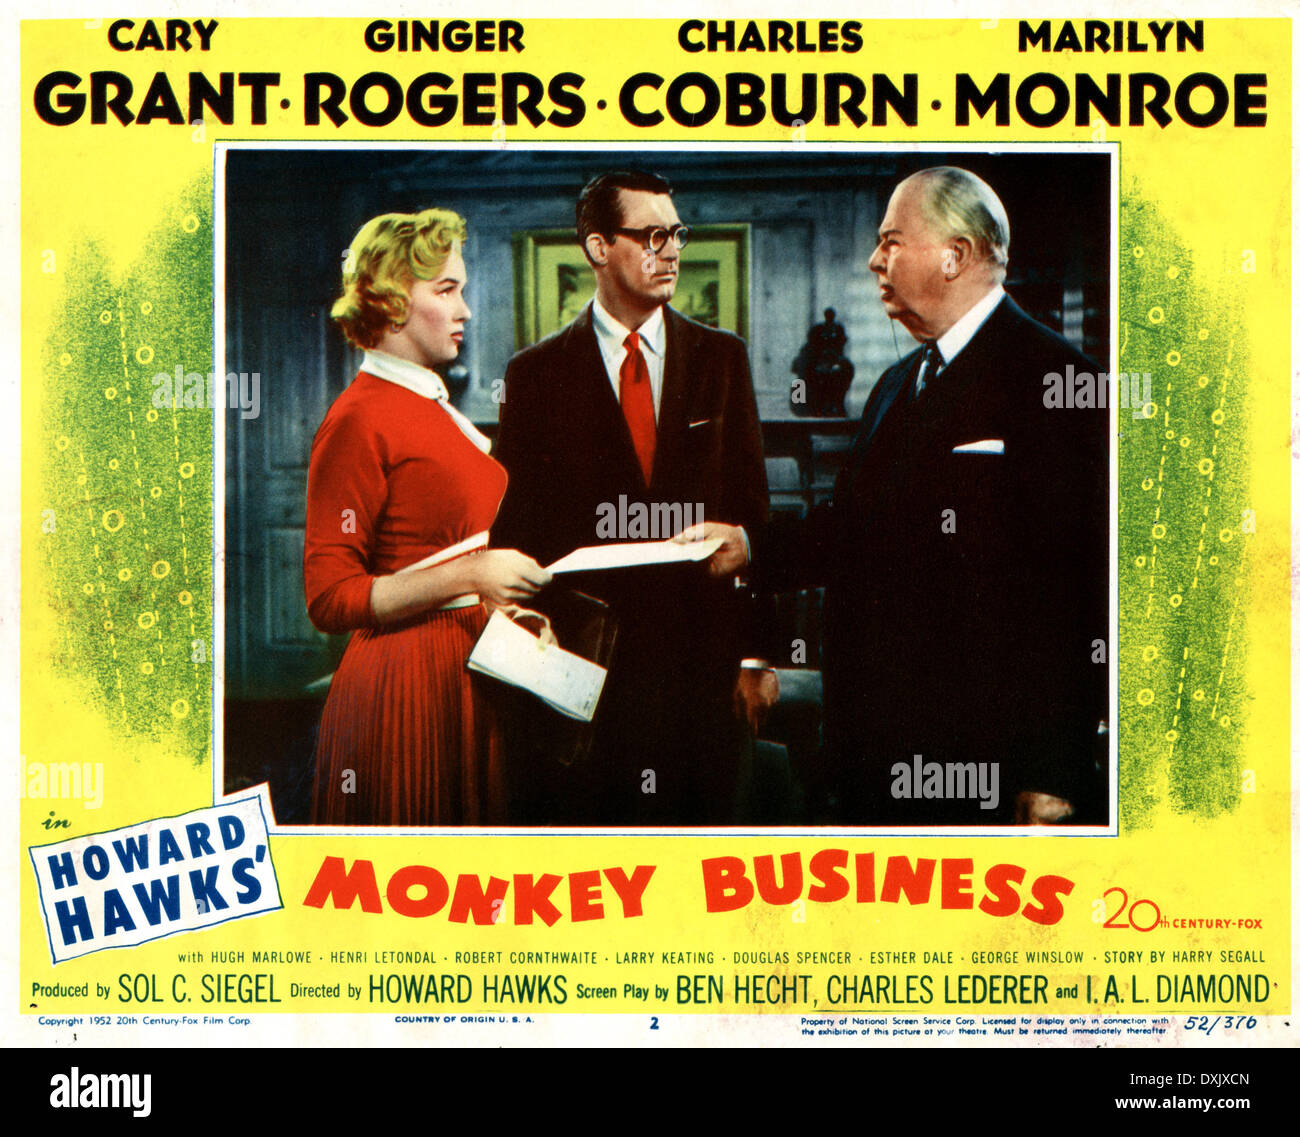 MONKEY BUSINESS (US1952) MARILYN MONROE, CARY GRANT, CHARLES Stock Photo